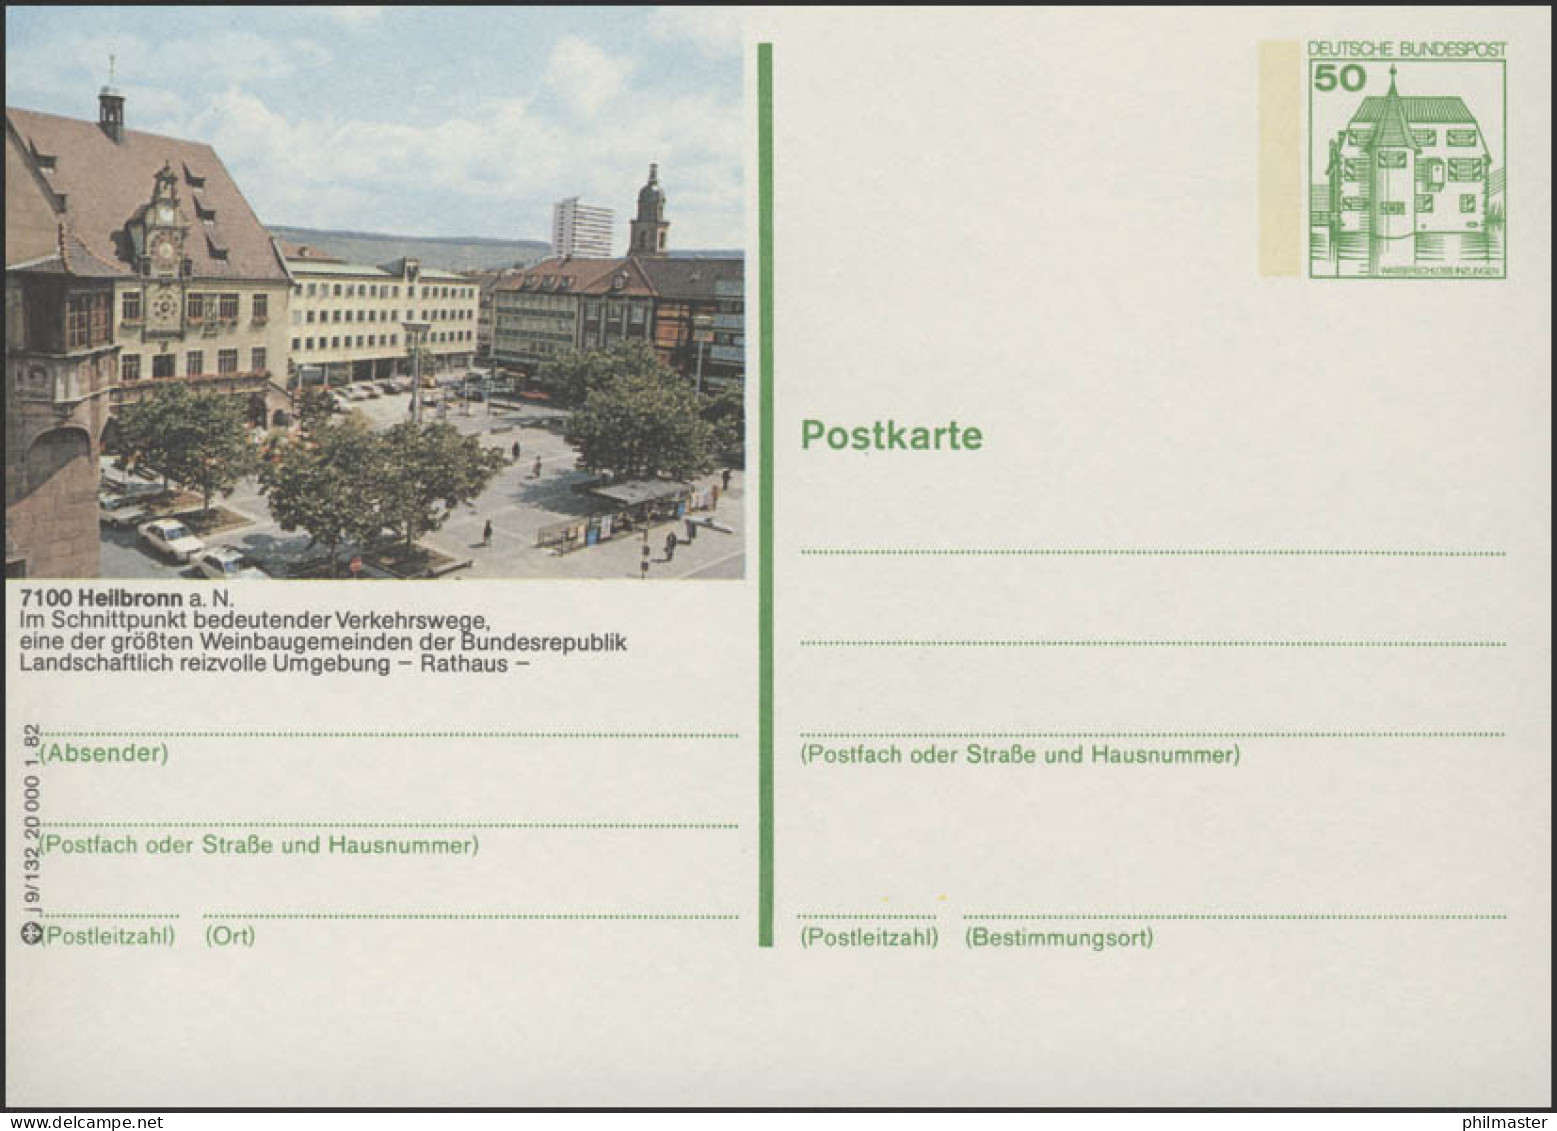 P134-j9/132 - 7100 Heilbronn, Rathaus ** - Illustrated Postcards - Mint